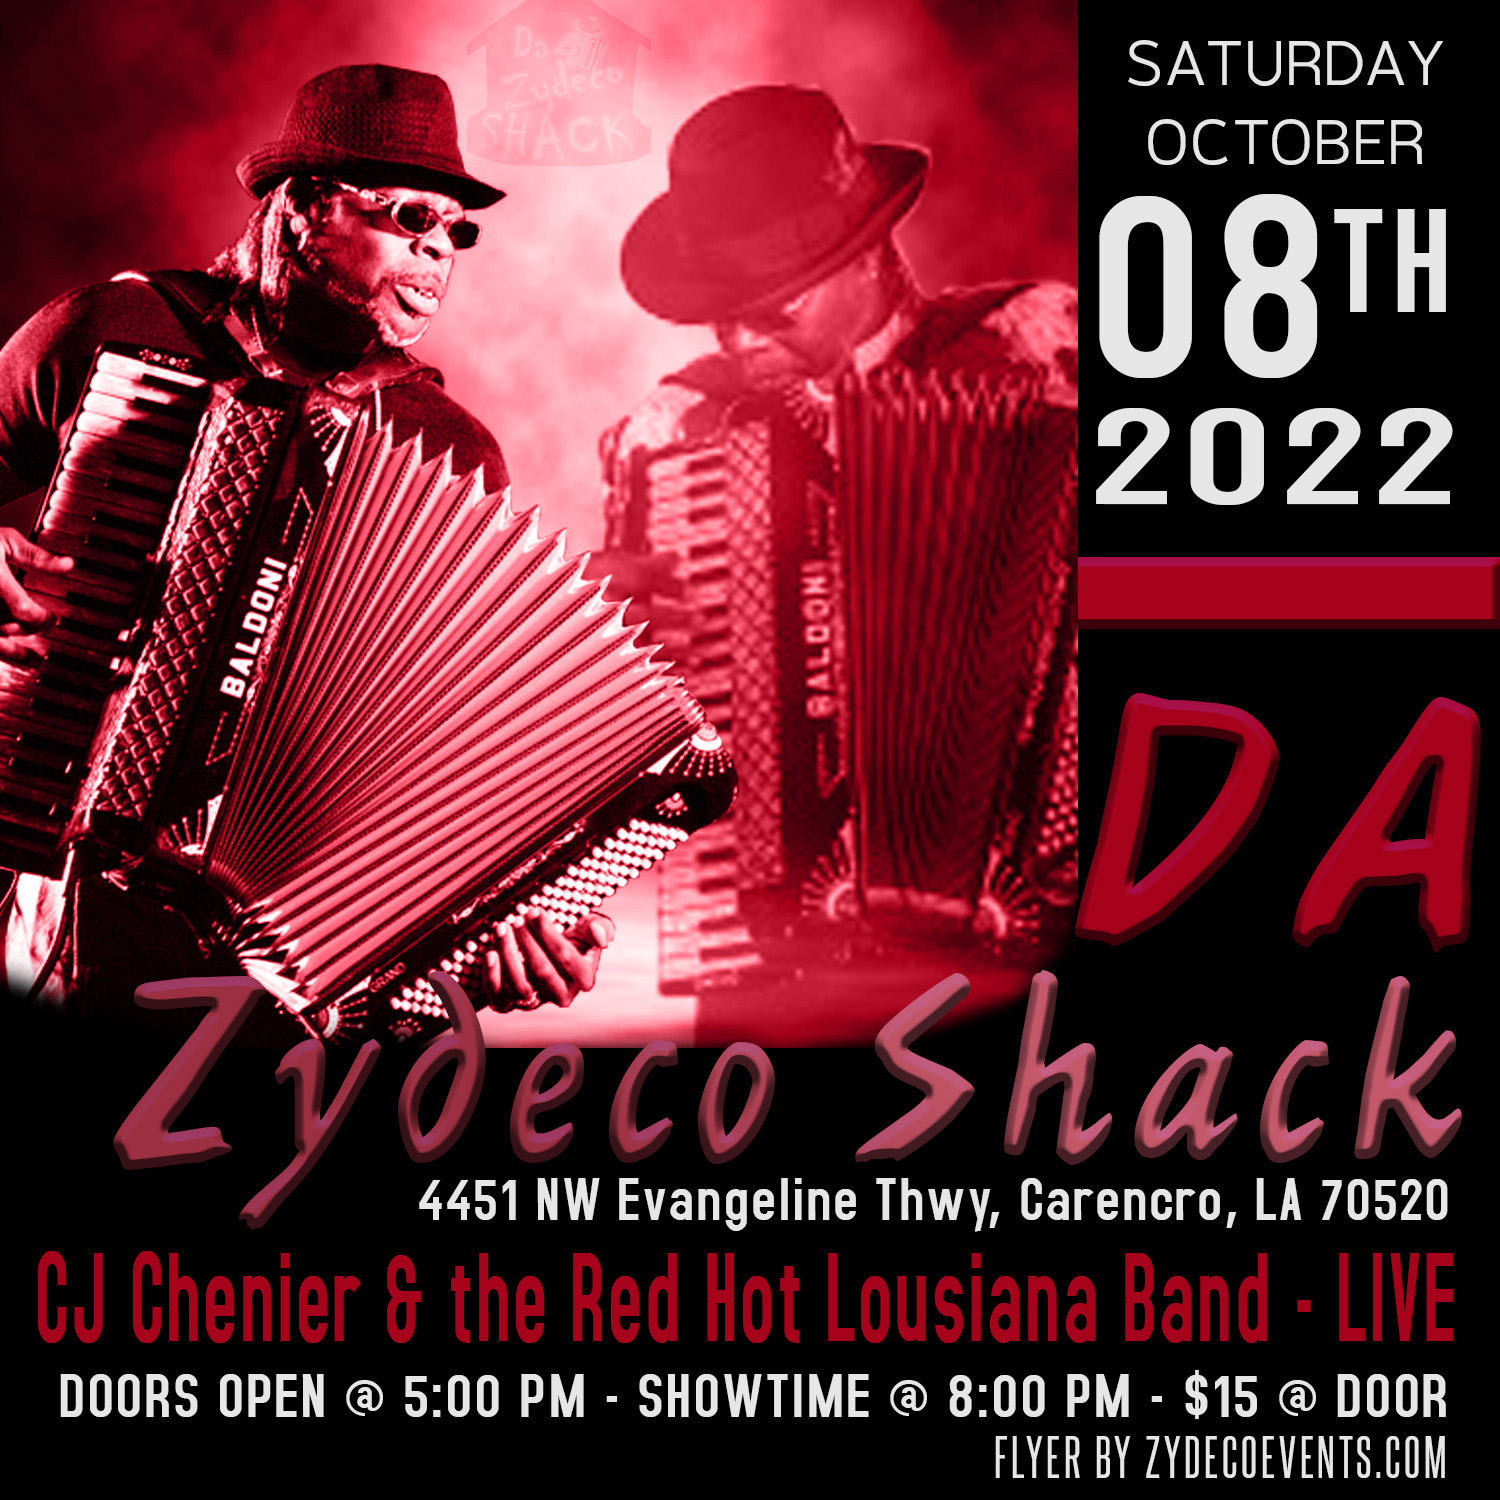 CJ Chenier & the Red Hot Louisiana Band - LIVE @ Da Zydeco Shack